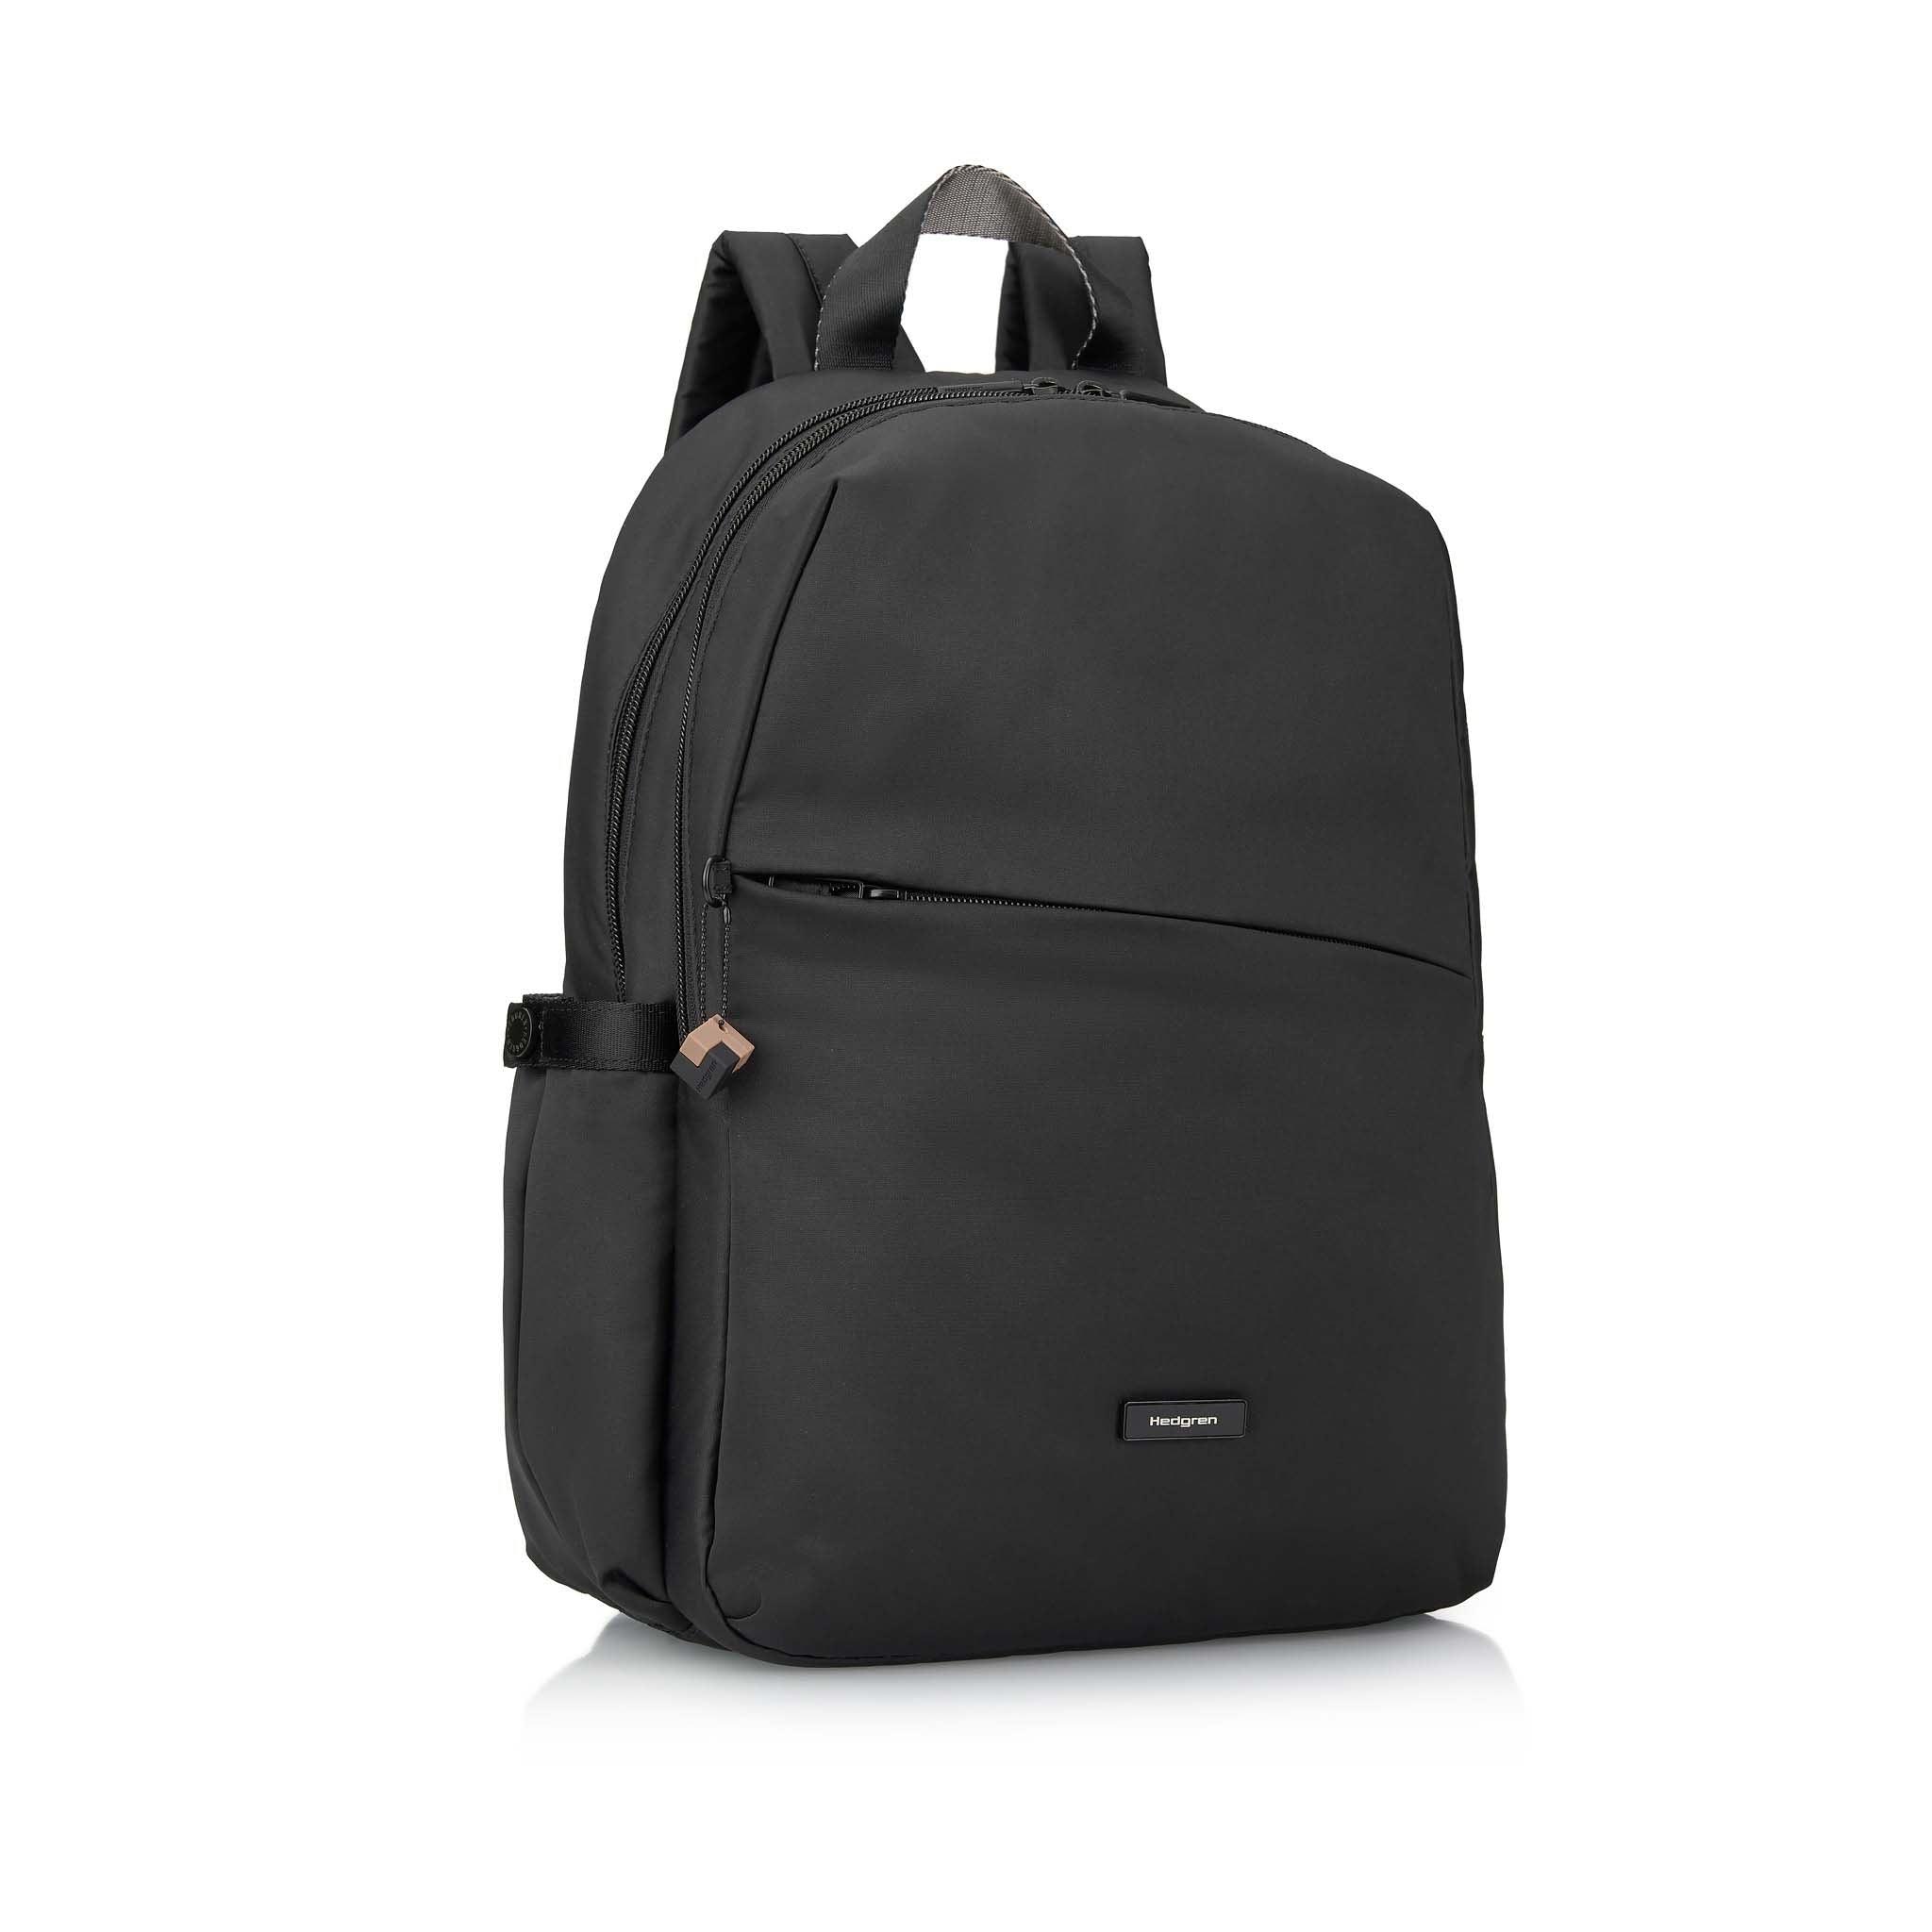 Laptop Bag 2.1 - Caramel  Bags, Laptop bag for women, Work bags